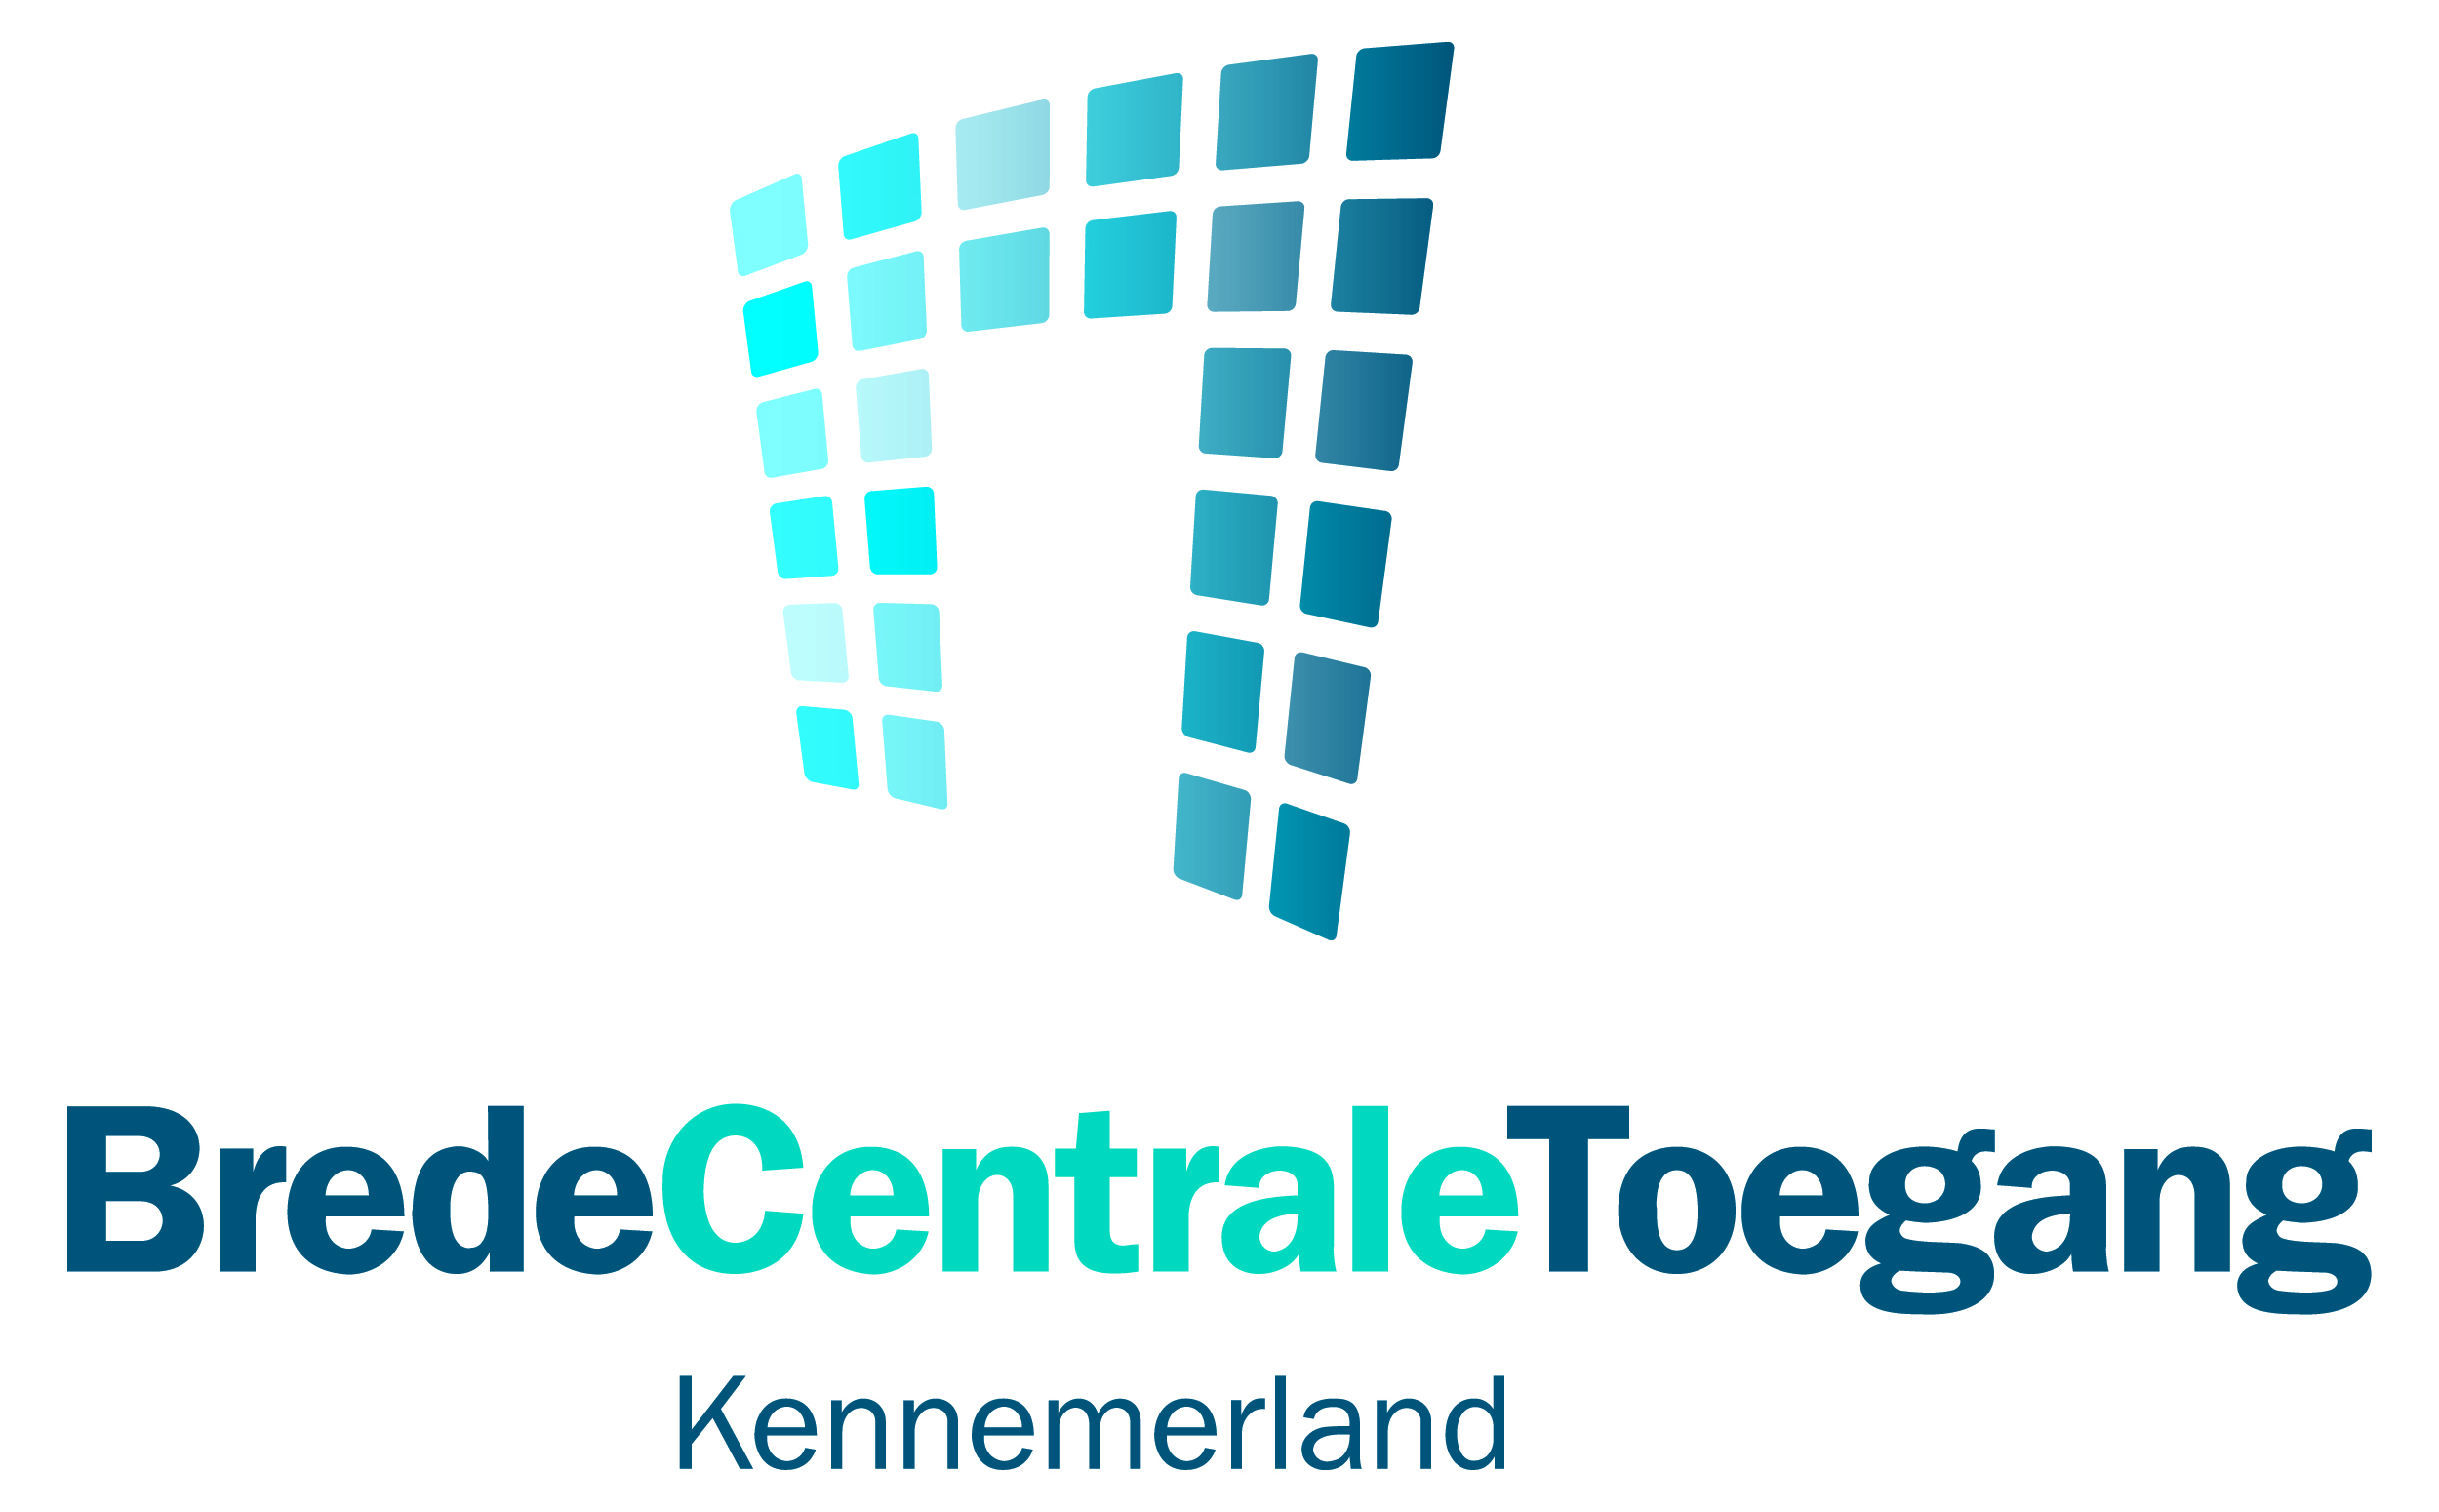 Logo Brede Centrale Toegang in kleur